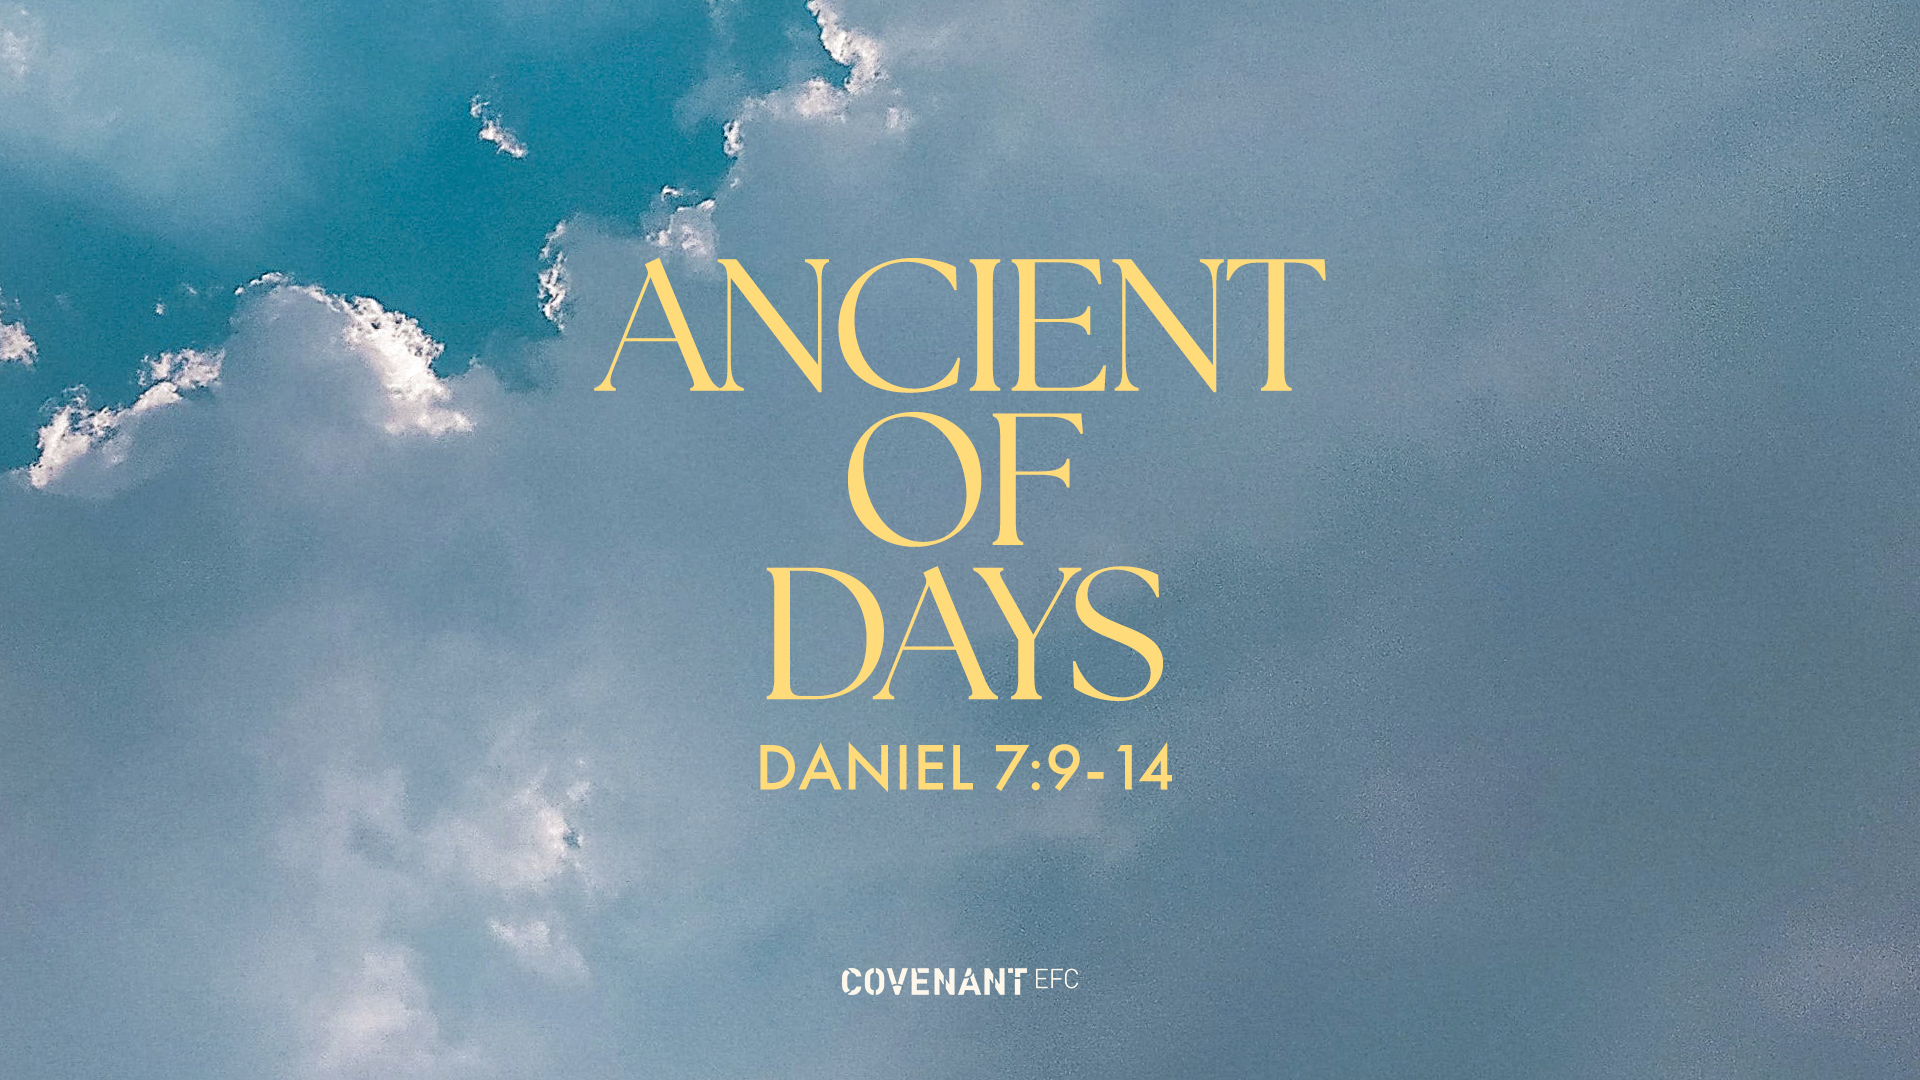 daniel 7 ancient of days